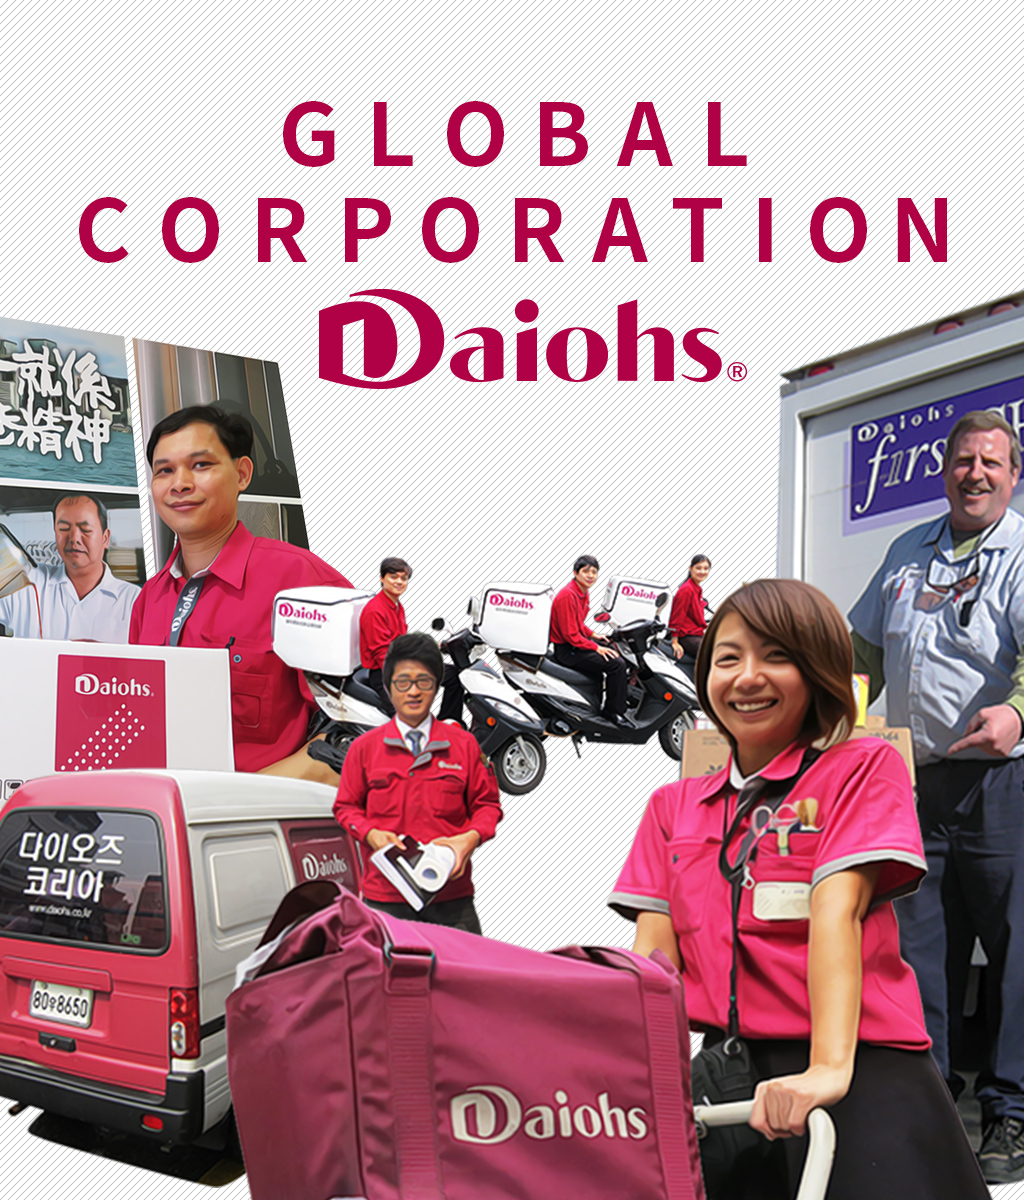 GLOBAL CORPORATION Daiohs